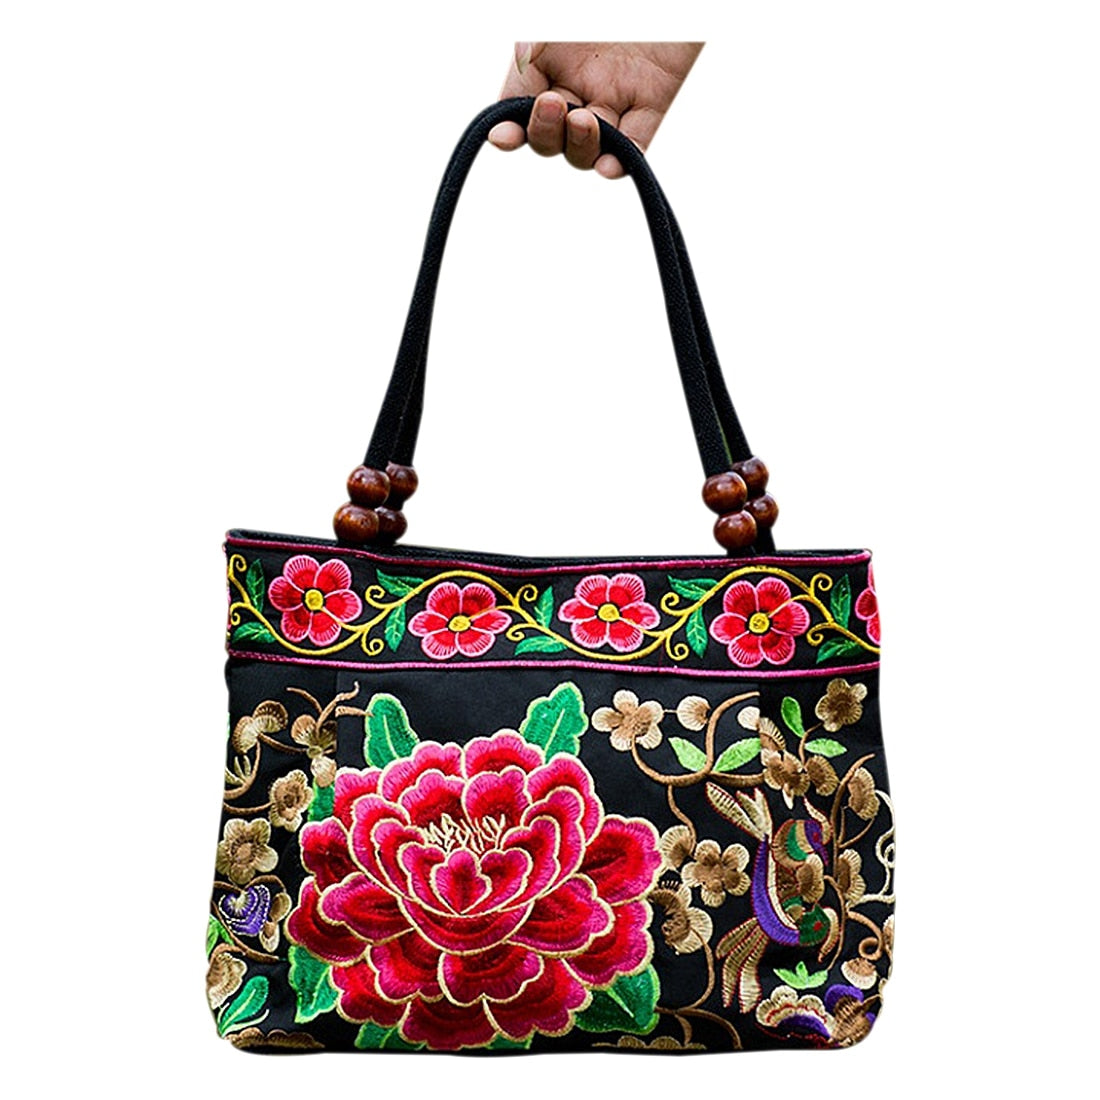 Chinese Style Women Handbag Embroidery Ethnic Summer Fashion Handmade Flowers Ladies Tote Shoulder Bags Cross-body - ebowsos